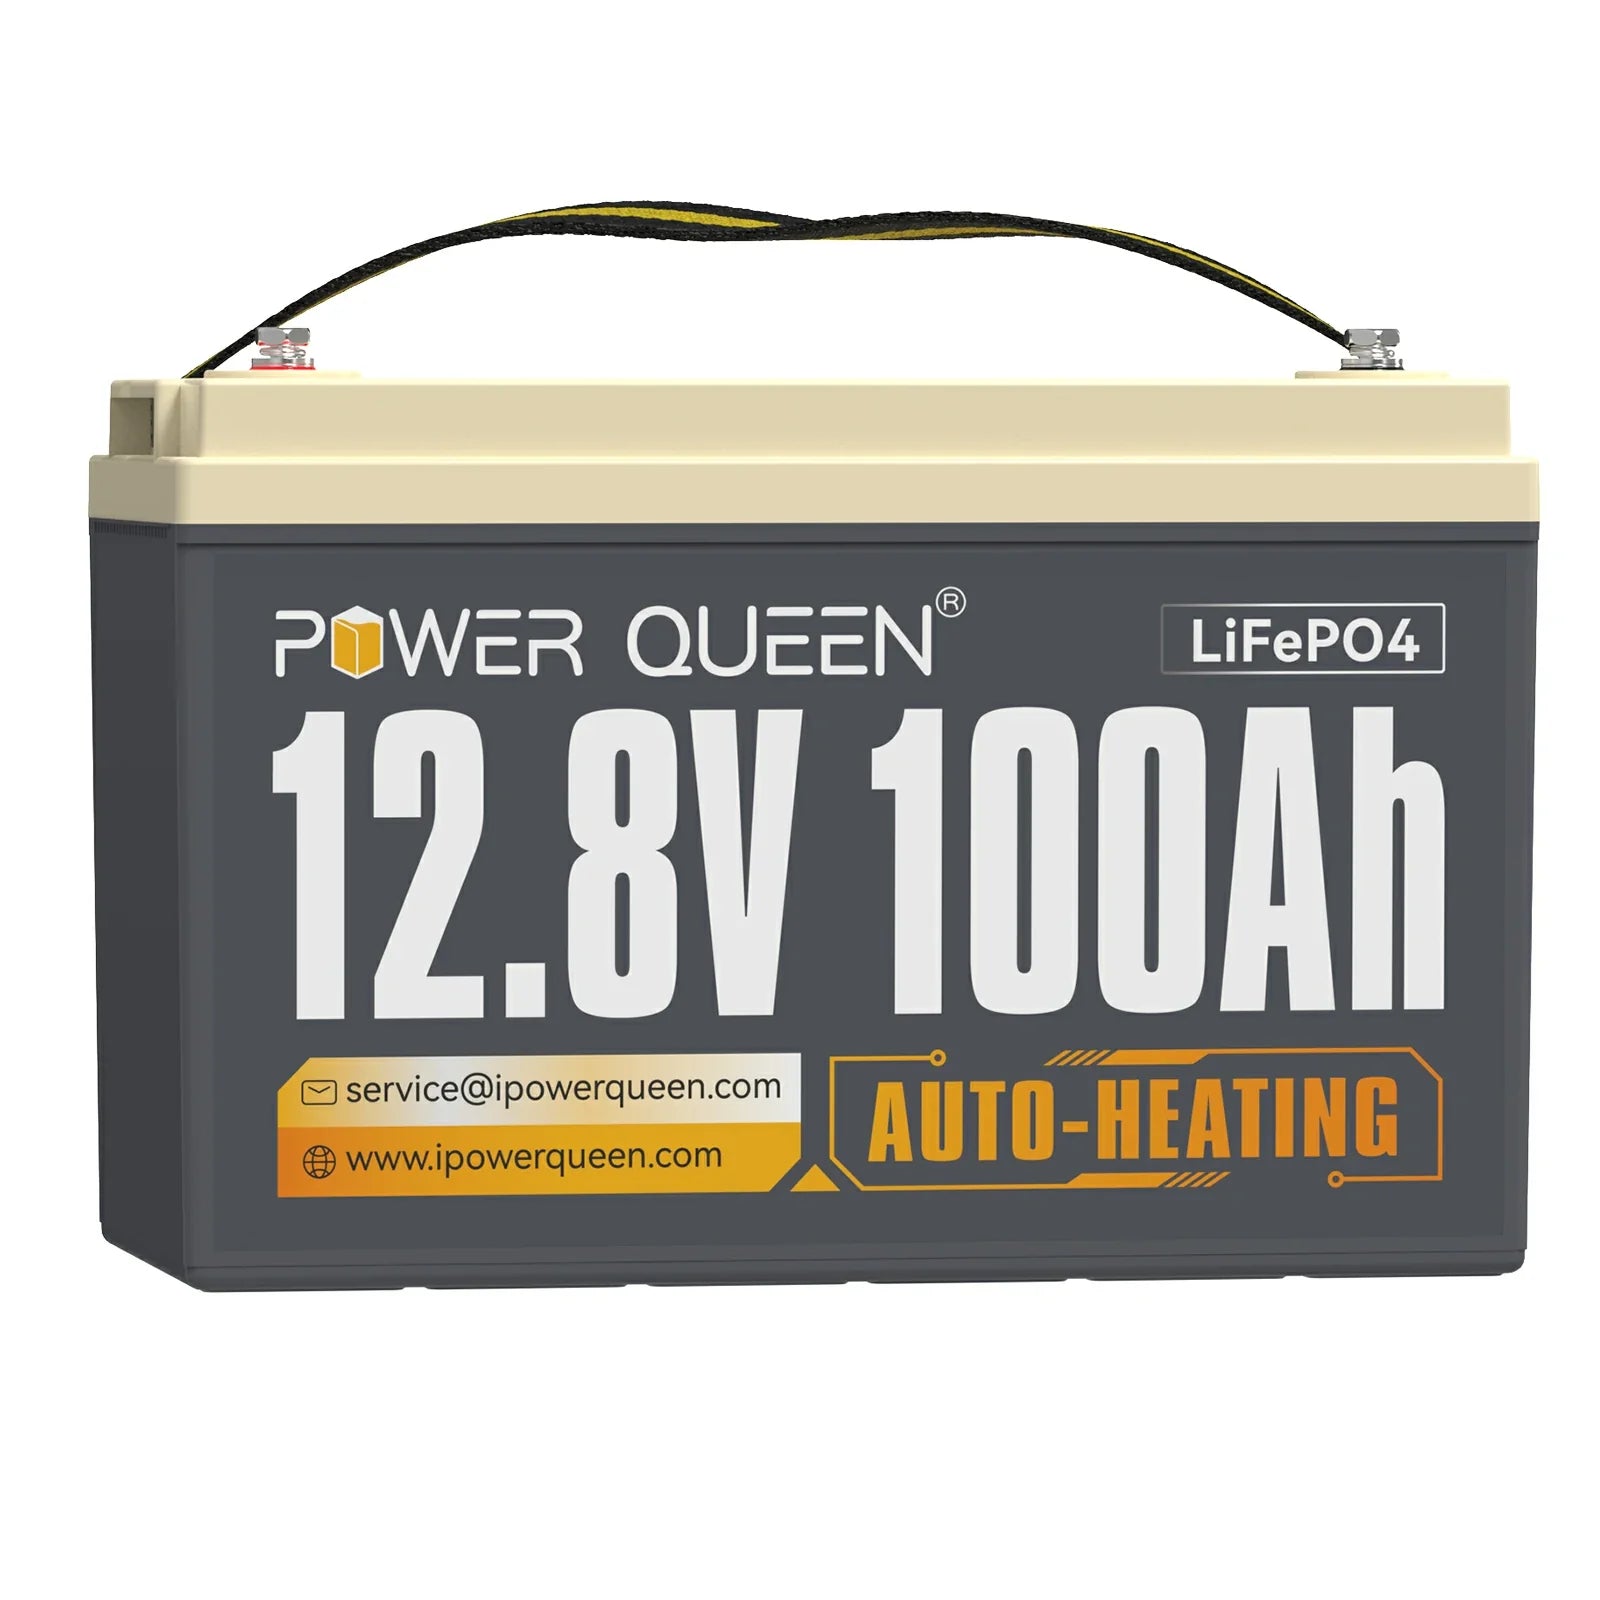 【0% Mwst.】Power Queen 12V 100Ah Selbstheizende LiFePO4 Batterie, Eingebautes 100A BMS